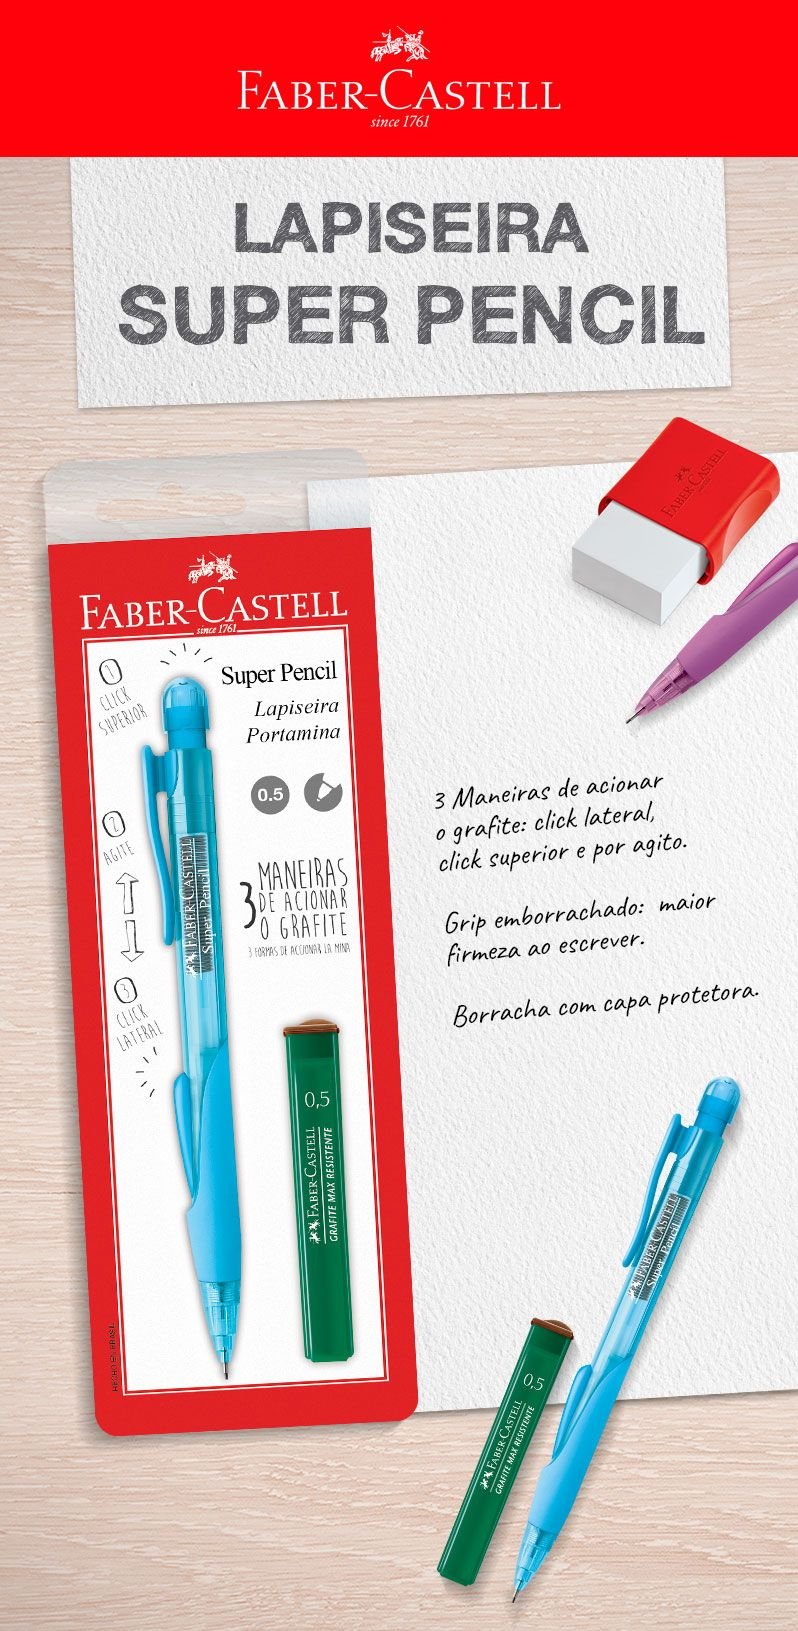 Lapiseira 0.5mm super pencil SM05LSP Faber Castell